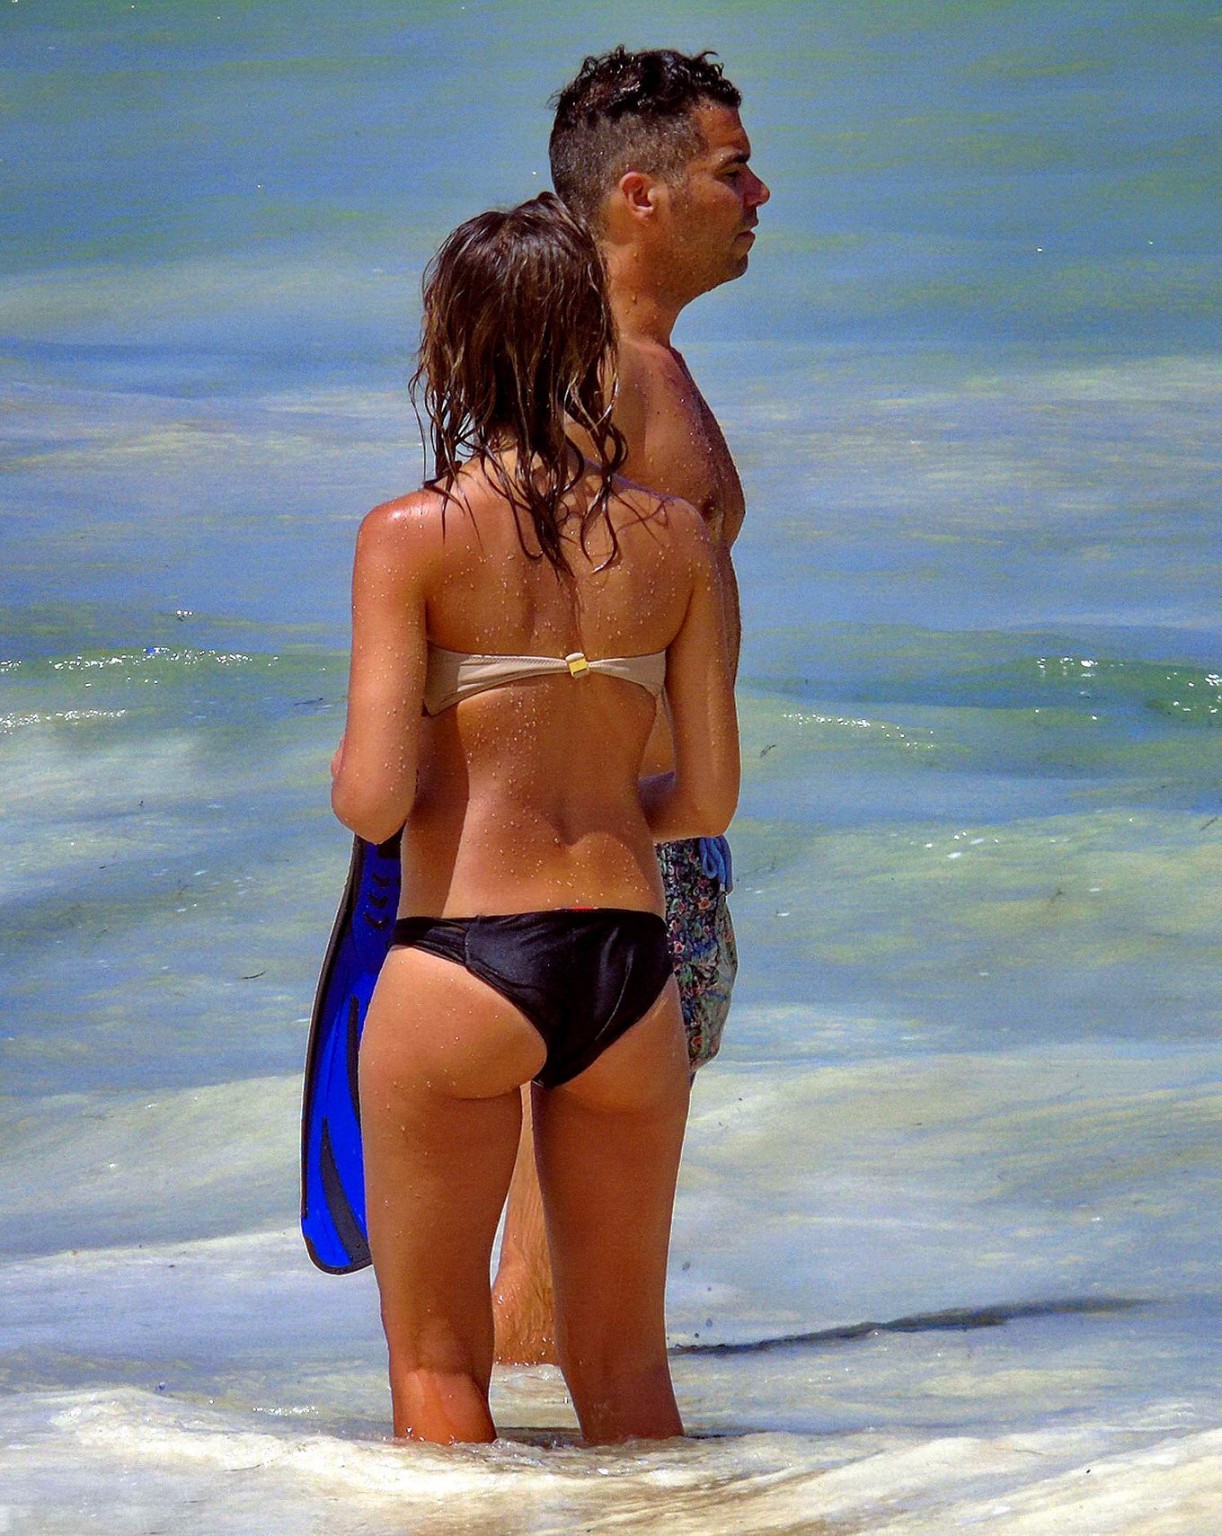 Jessica Alba wearing a strapless bikini on a beach in Mexico #75191638